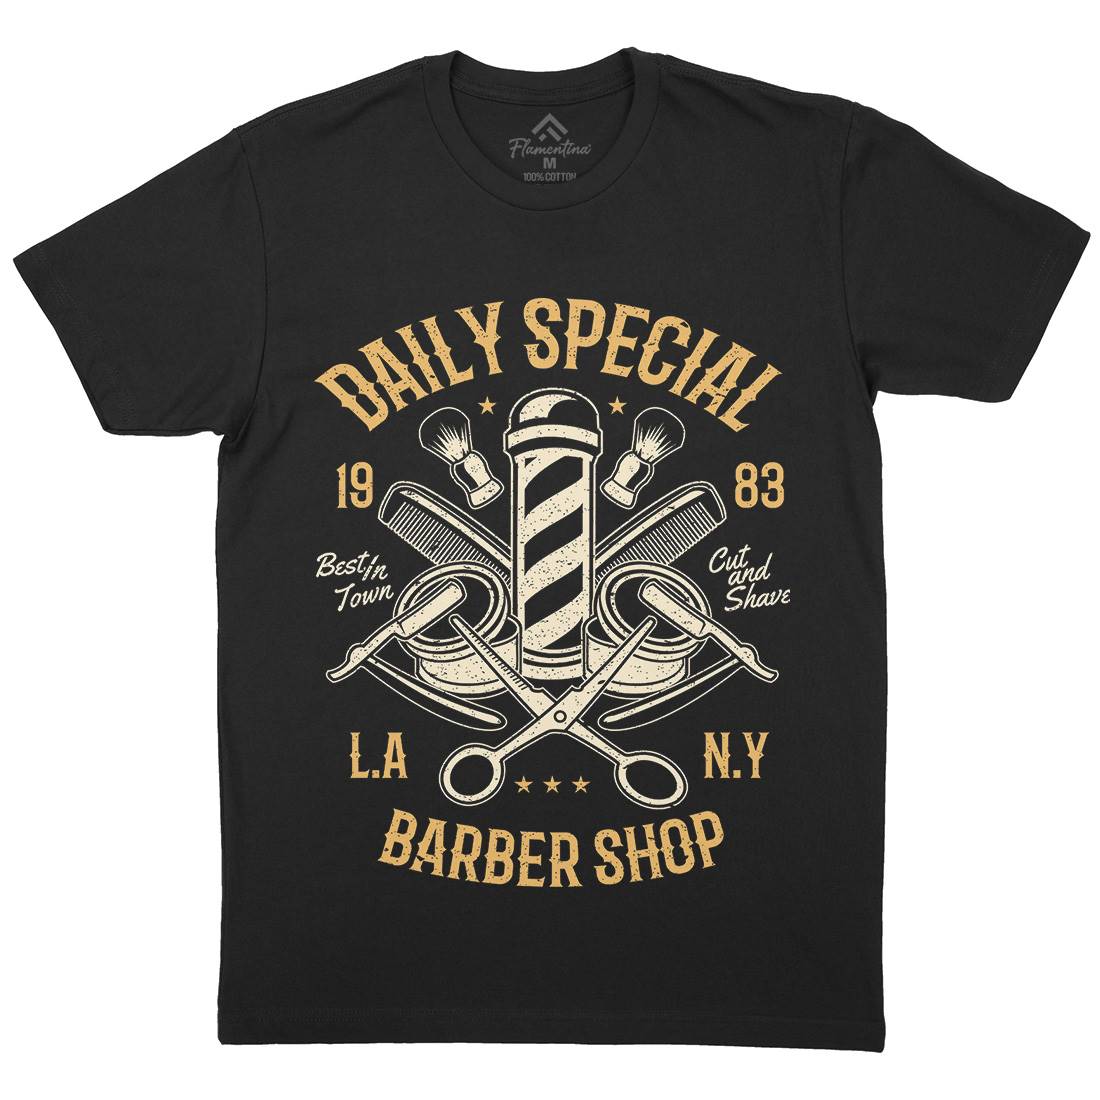 Daily Special Shop Mens Crew Neck T-Shirt Barber A041